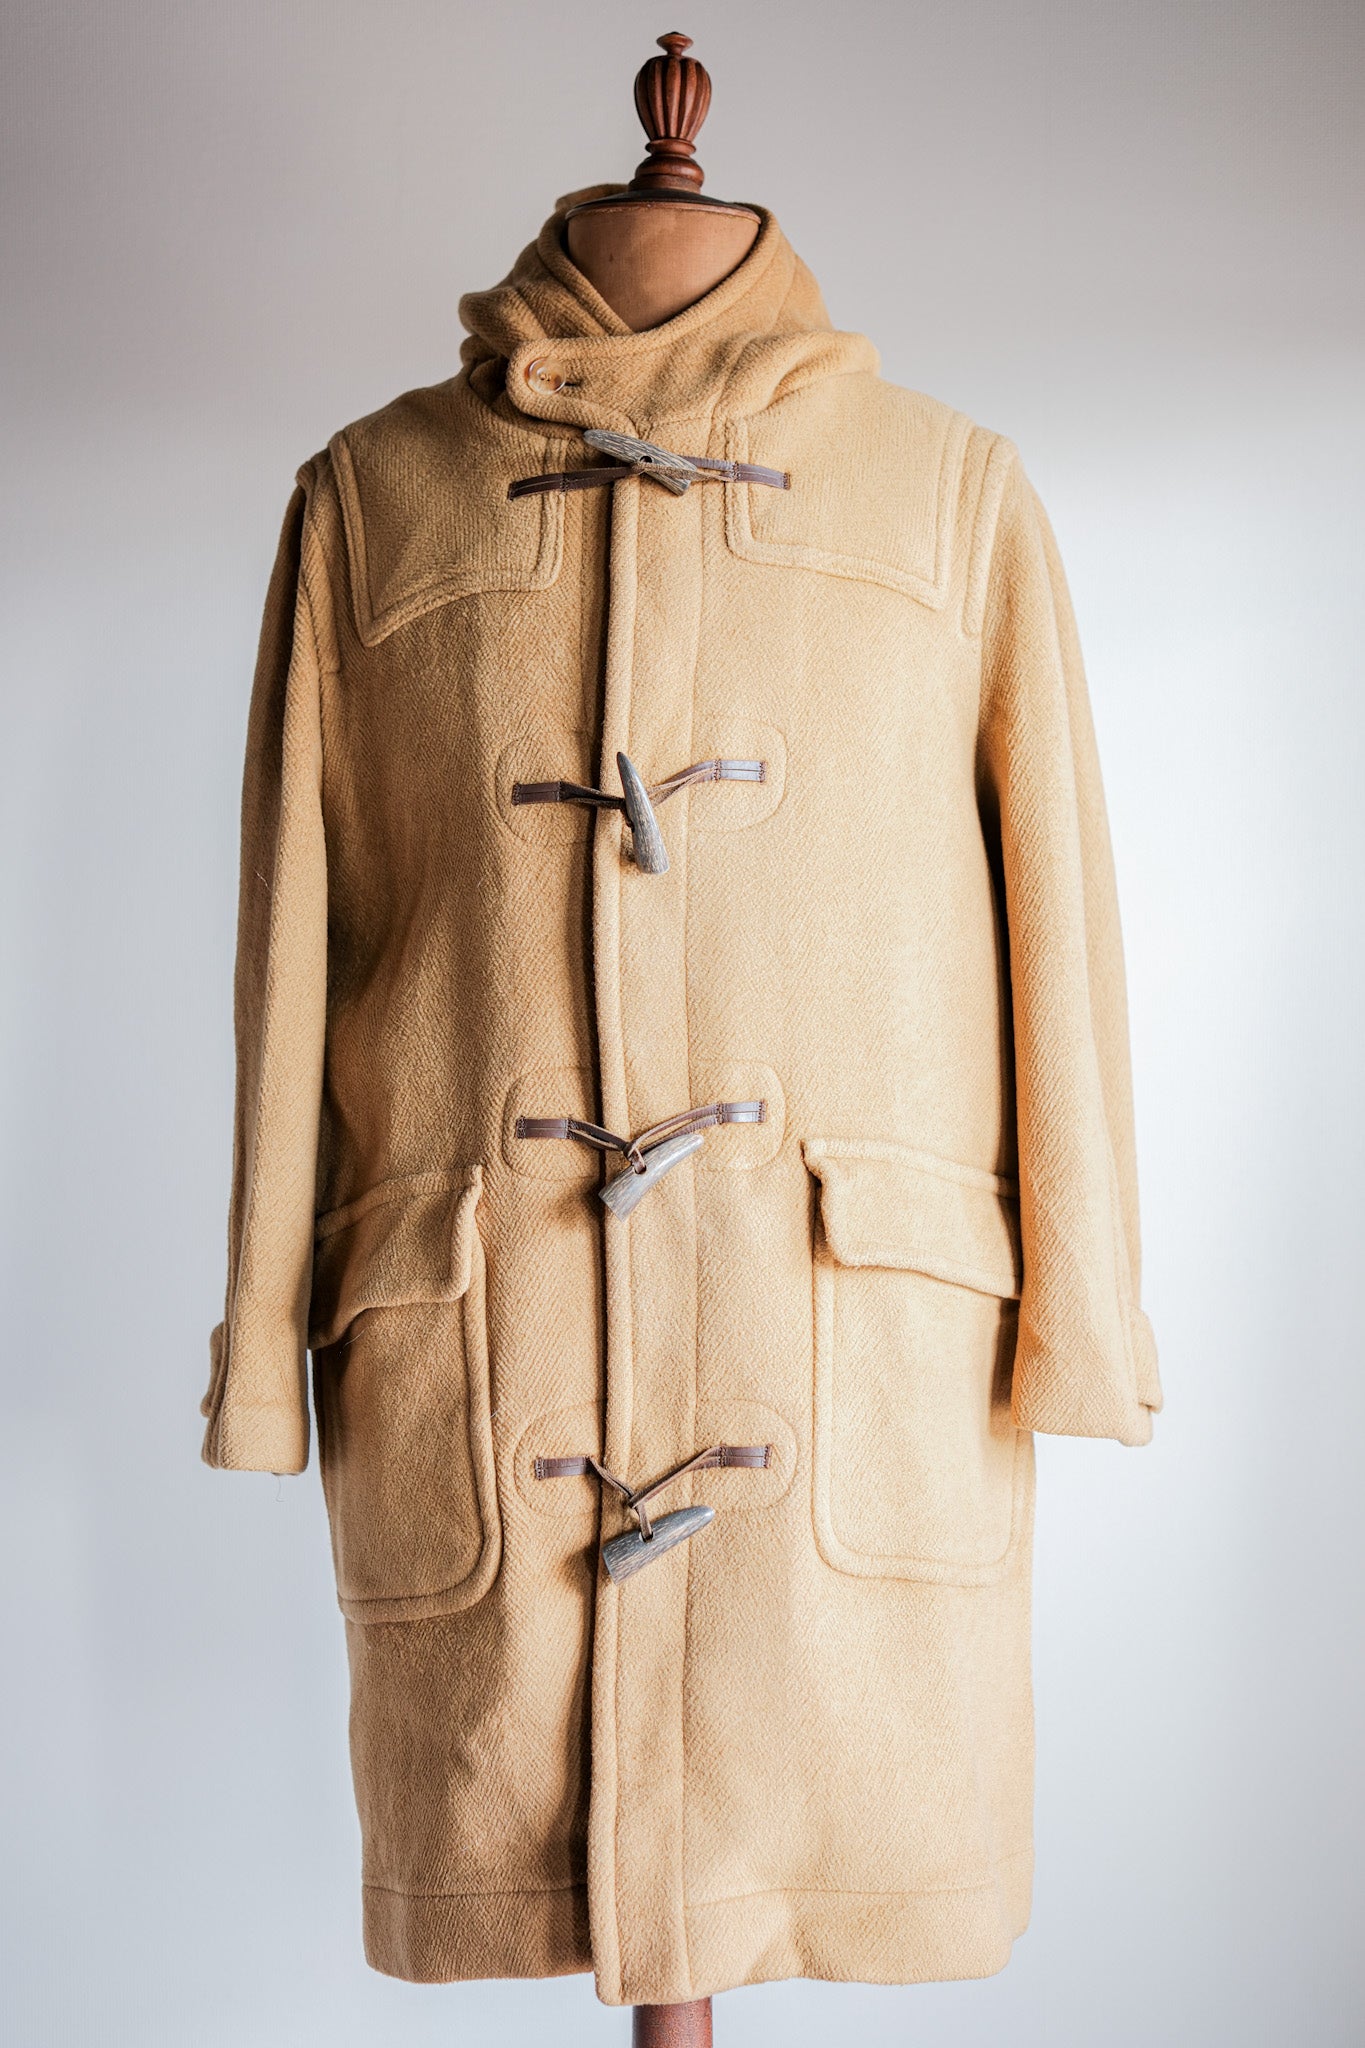 90's】Old INVERTERE HBT Wool Duffle Coat Size.38R 